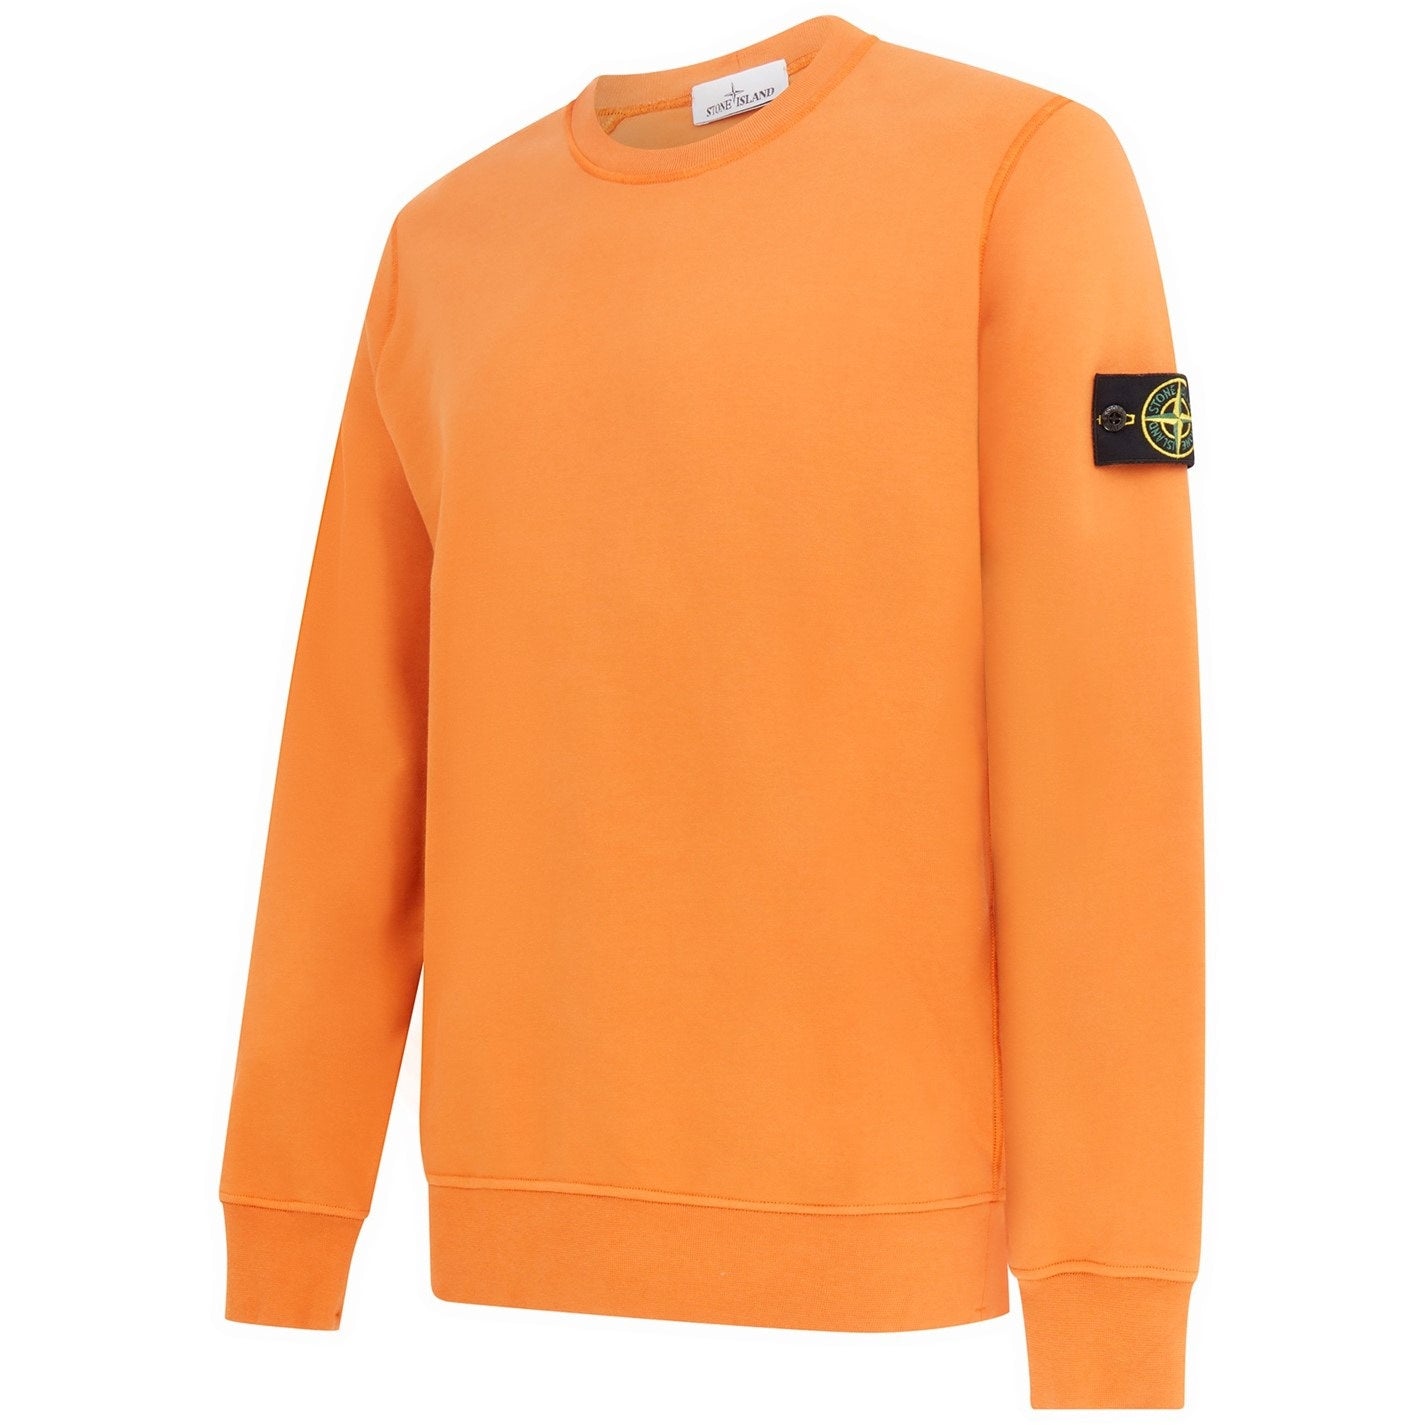 Stone Island Orange Garment Dyed Sweatshirt - DANYOUNGUK